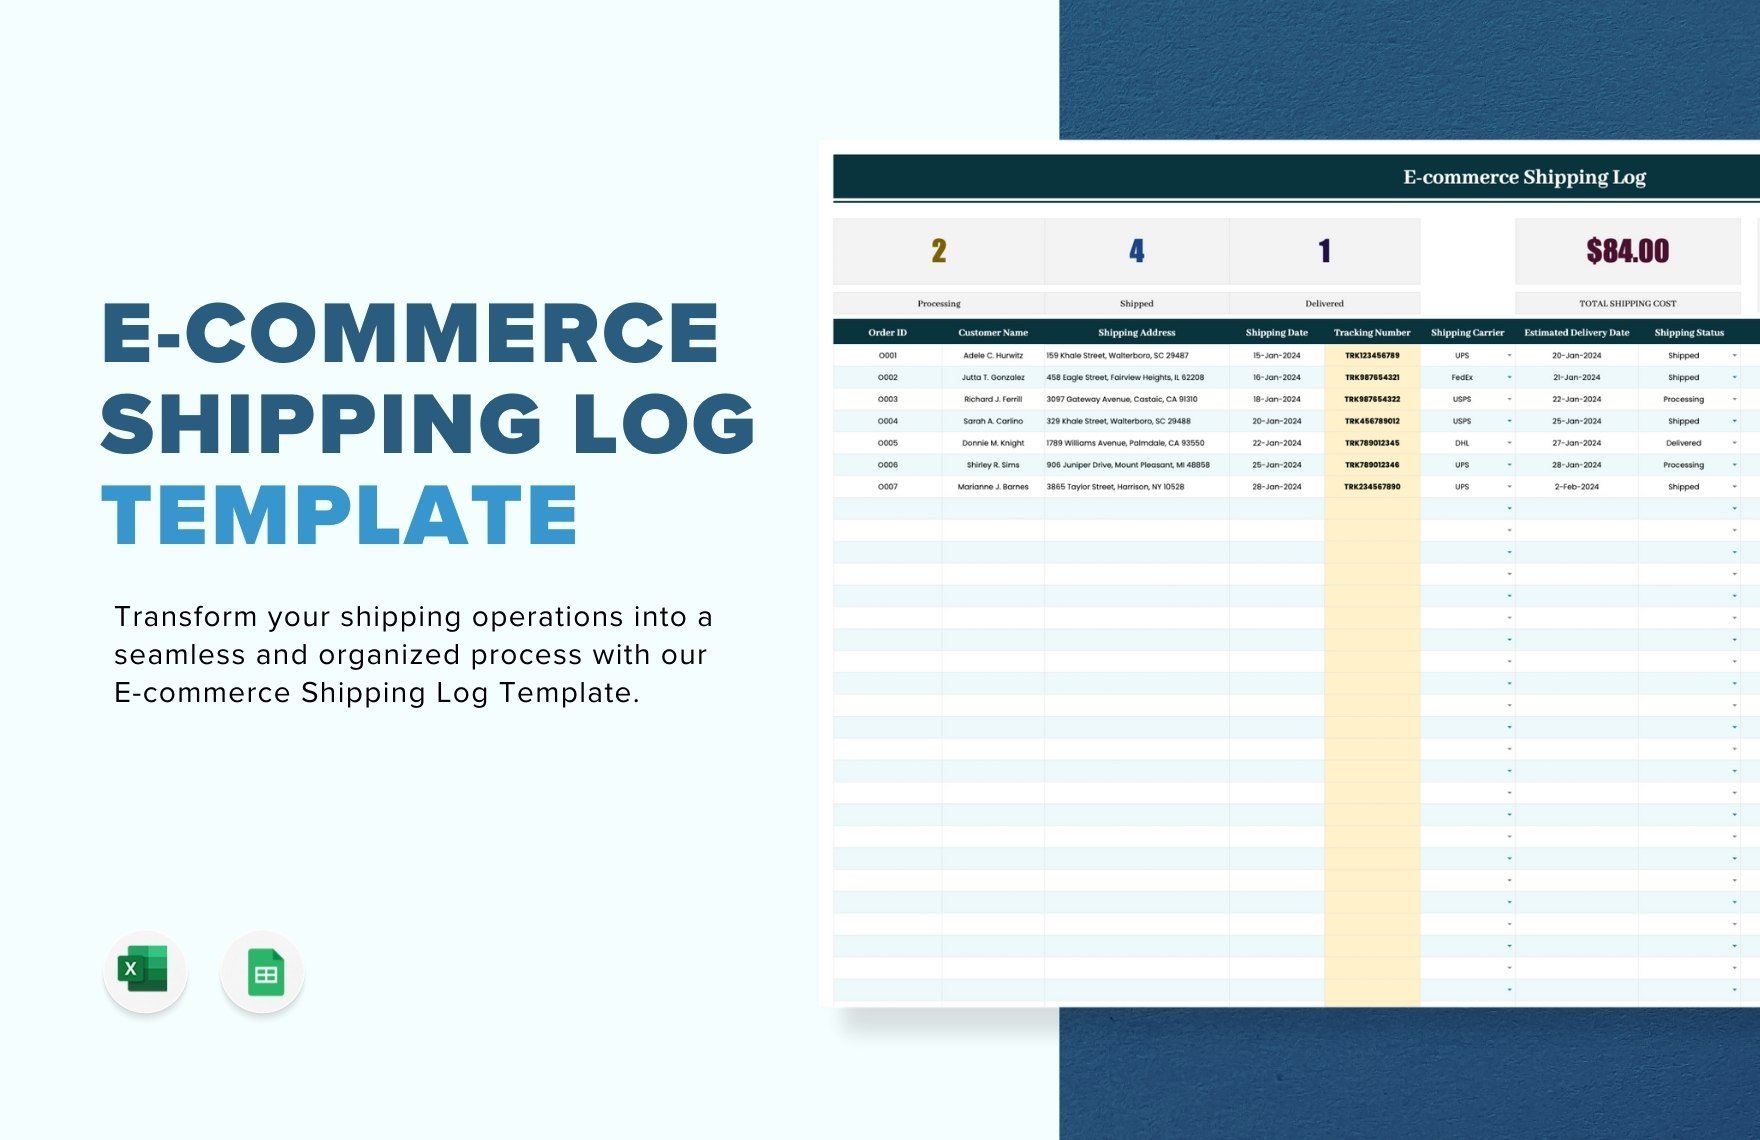 E-commerce Shipping Log Template